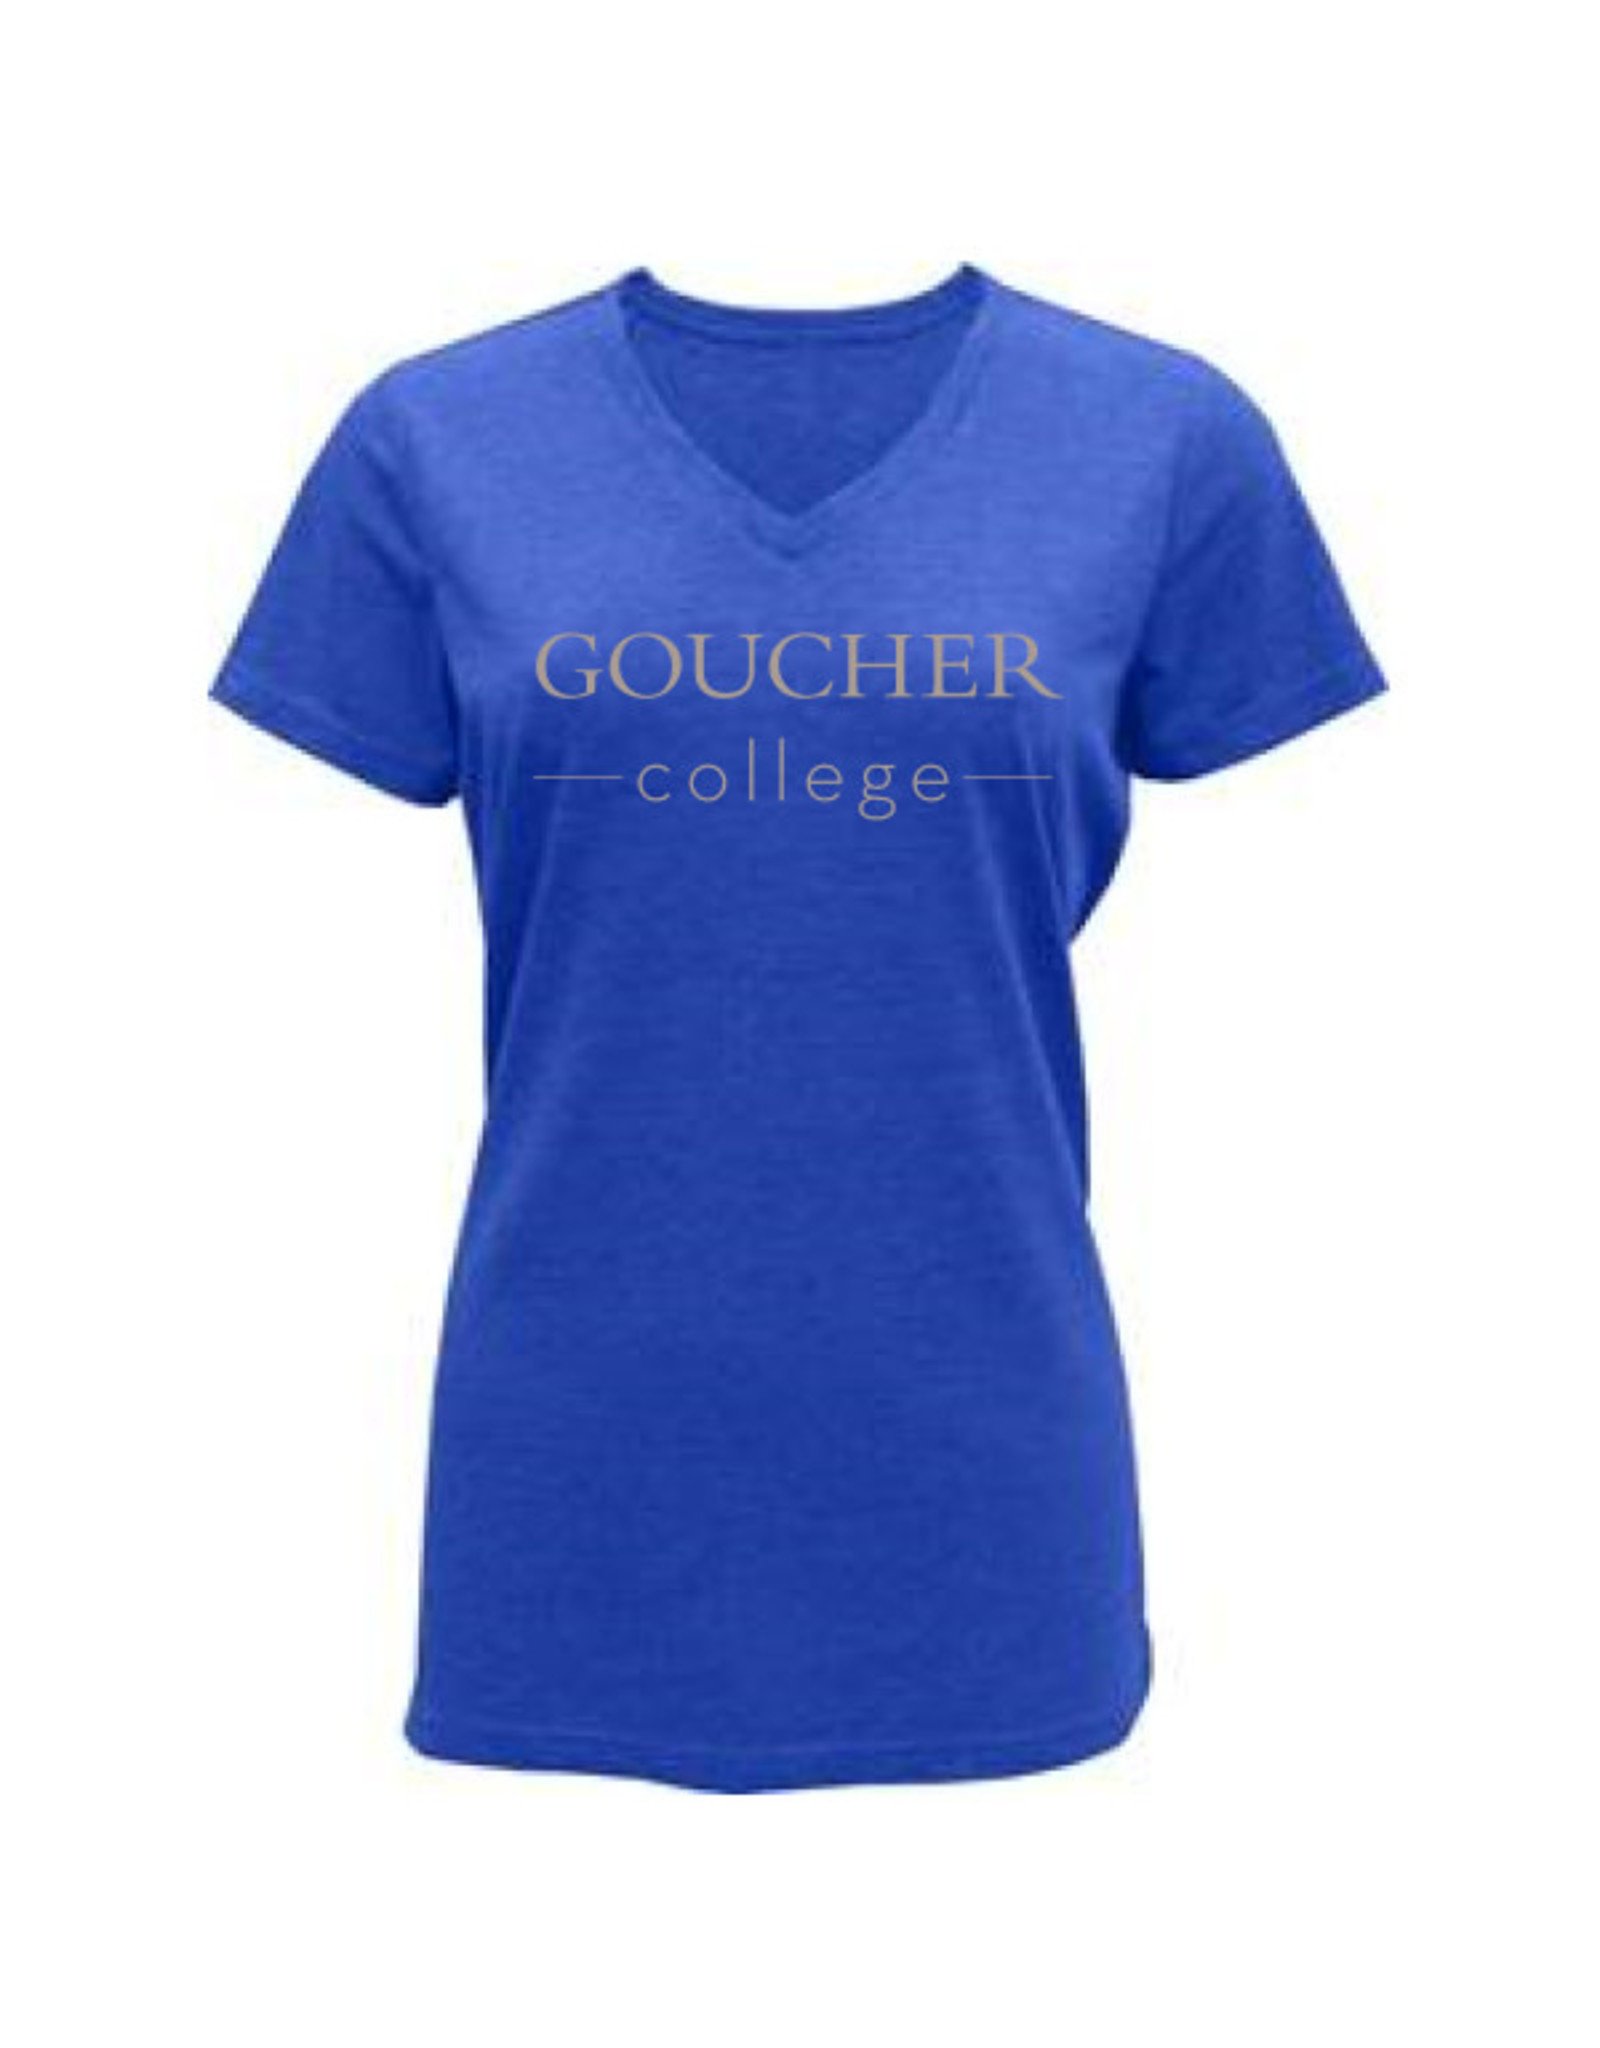 BAW Women's Tri-Blend V-Neck T-Shirt "Goucher College"